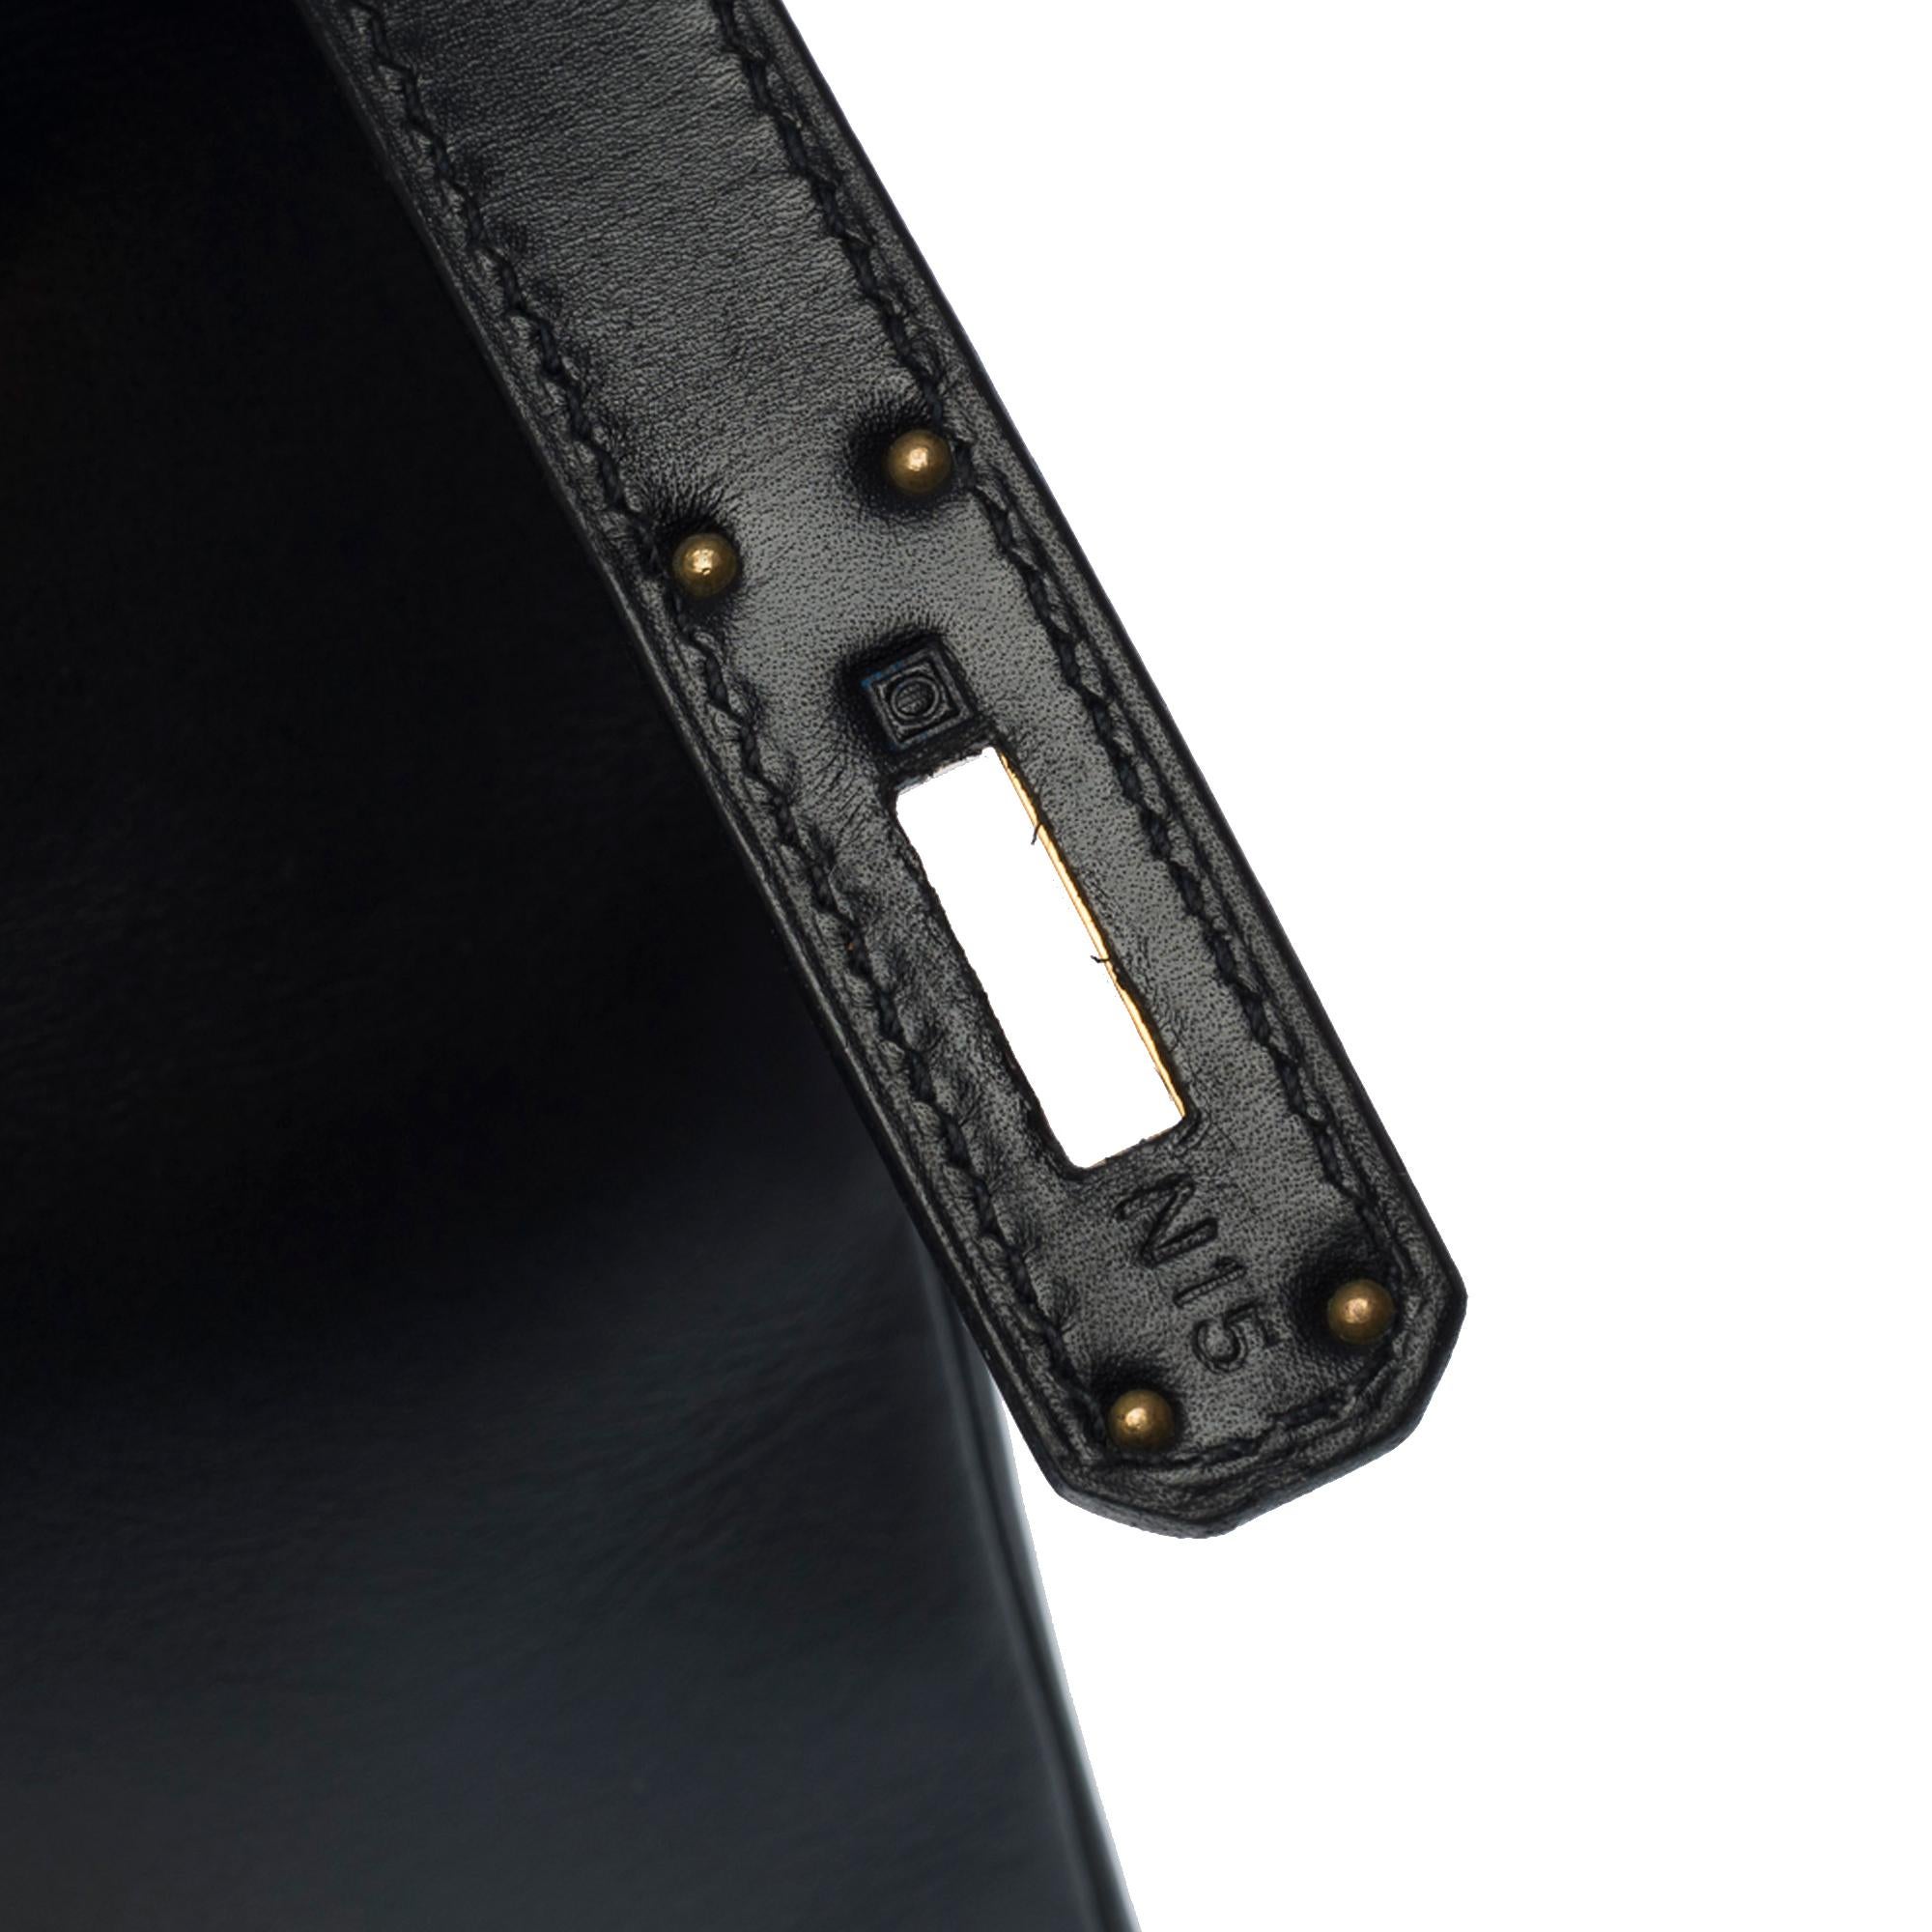 Women's or Men's Rare Hermès Kelly 32 retourne handbag strap in black box calfskin leather, GHW